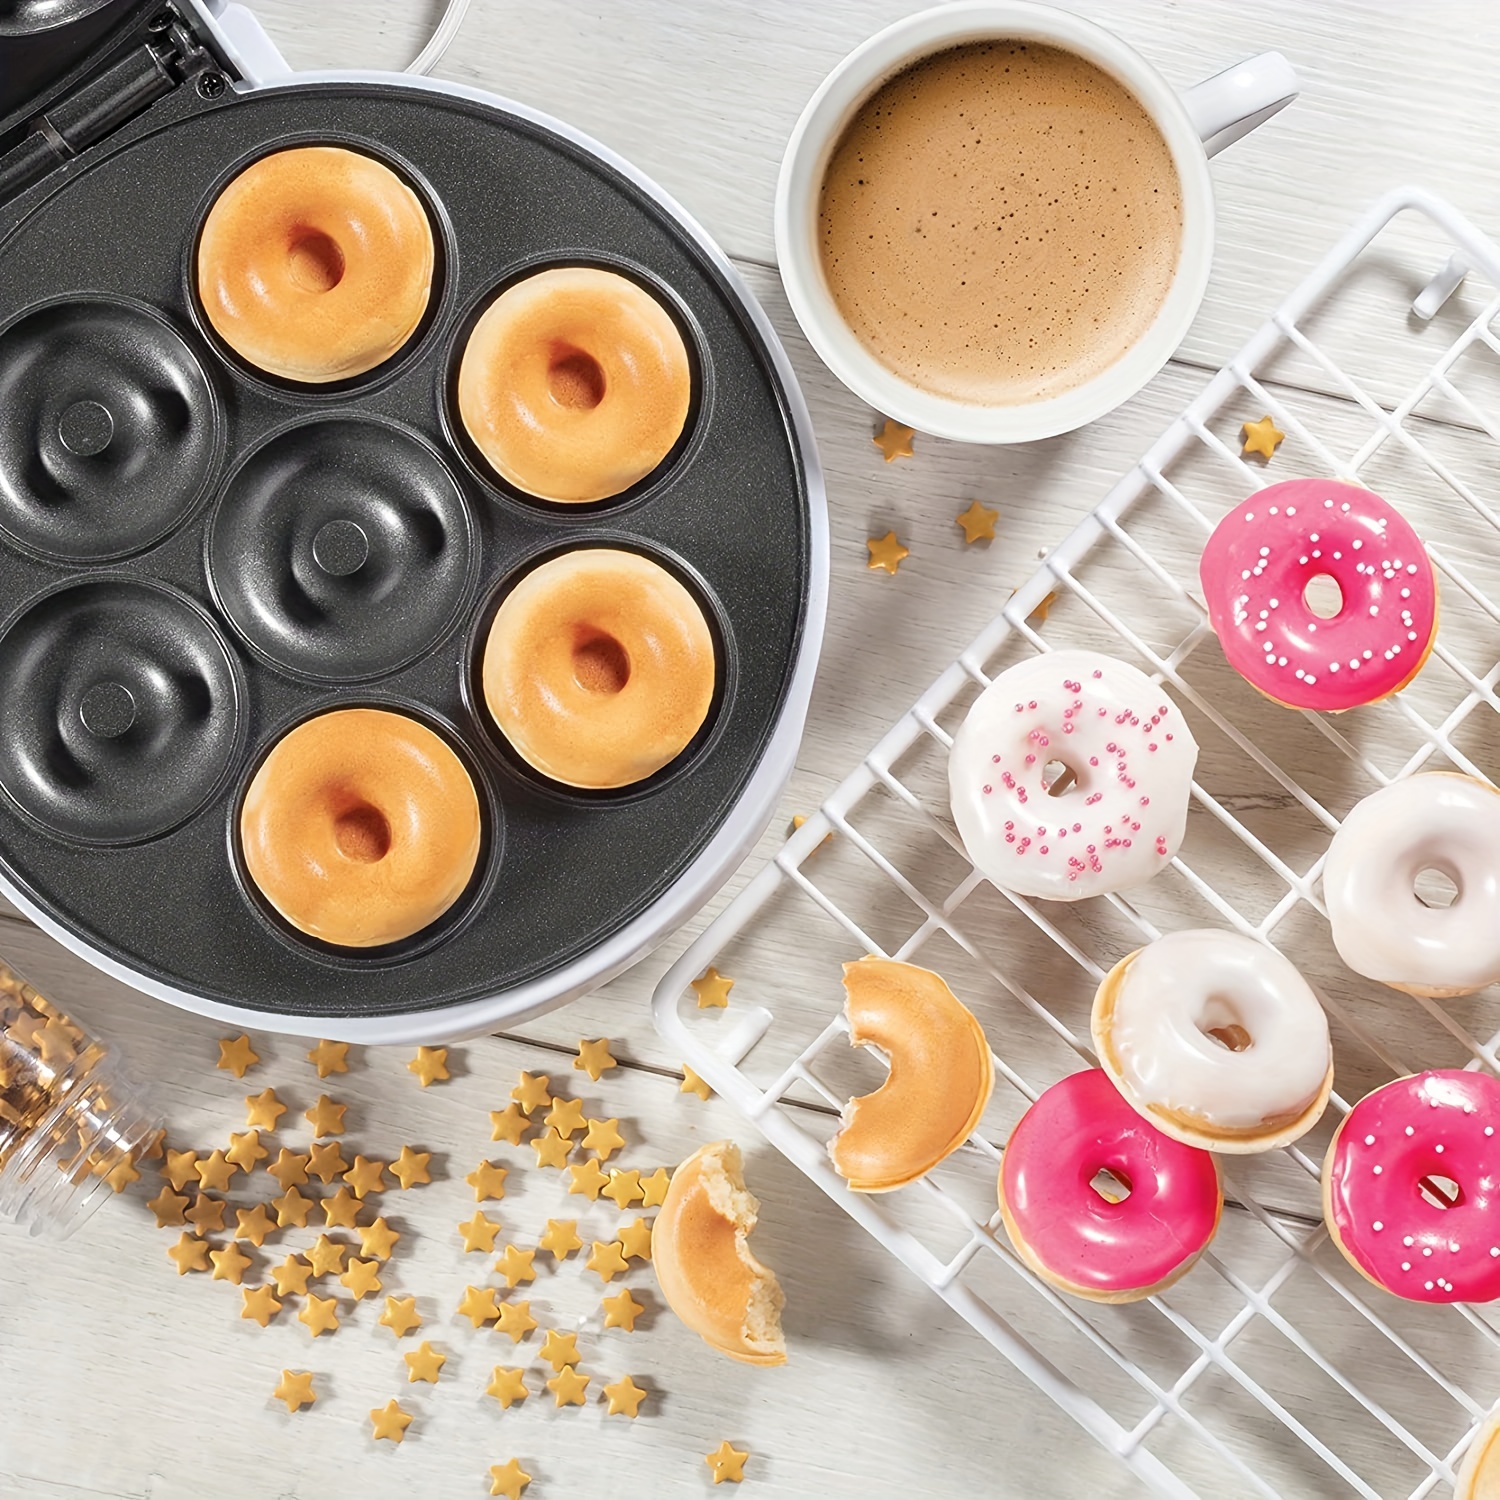 non-stick mini thin waffle donut maker